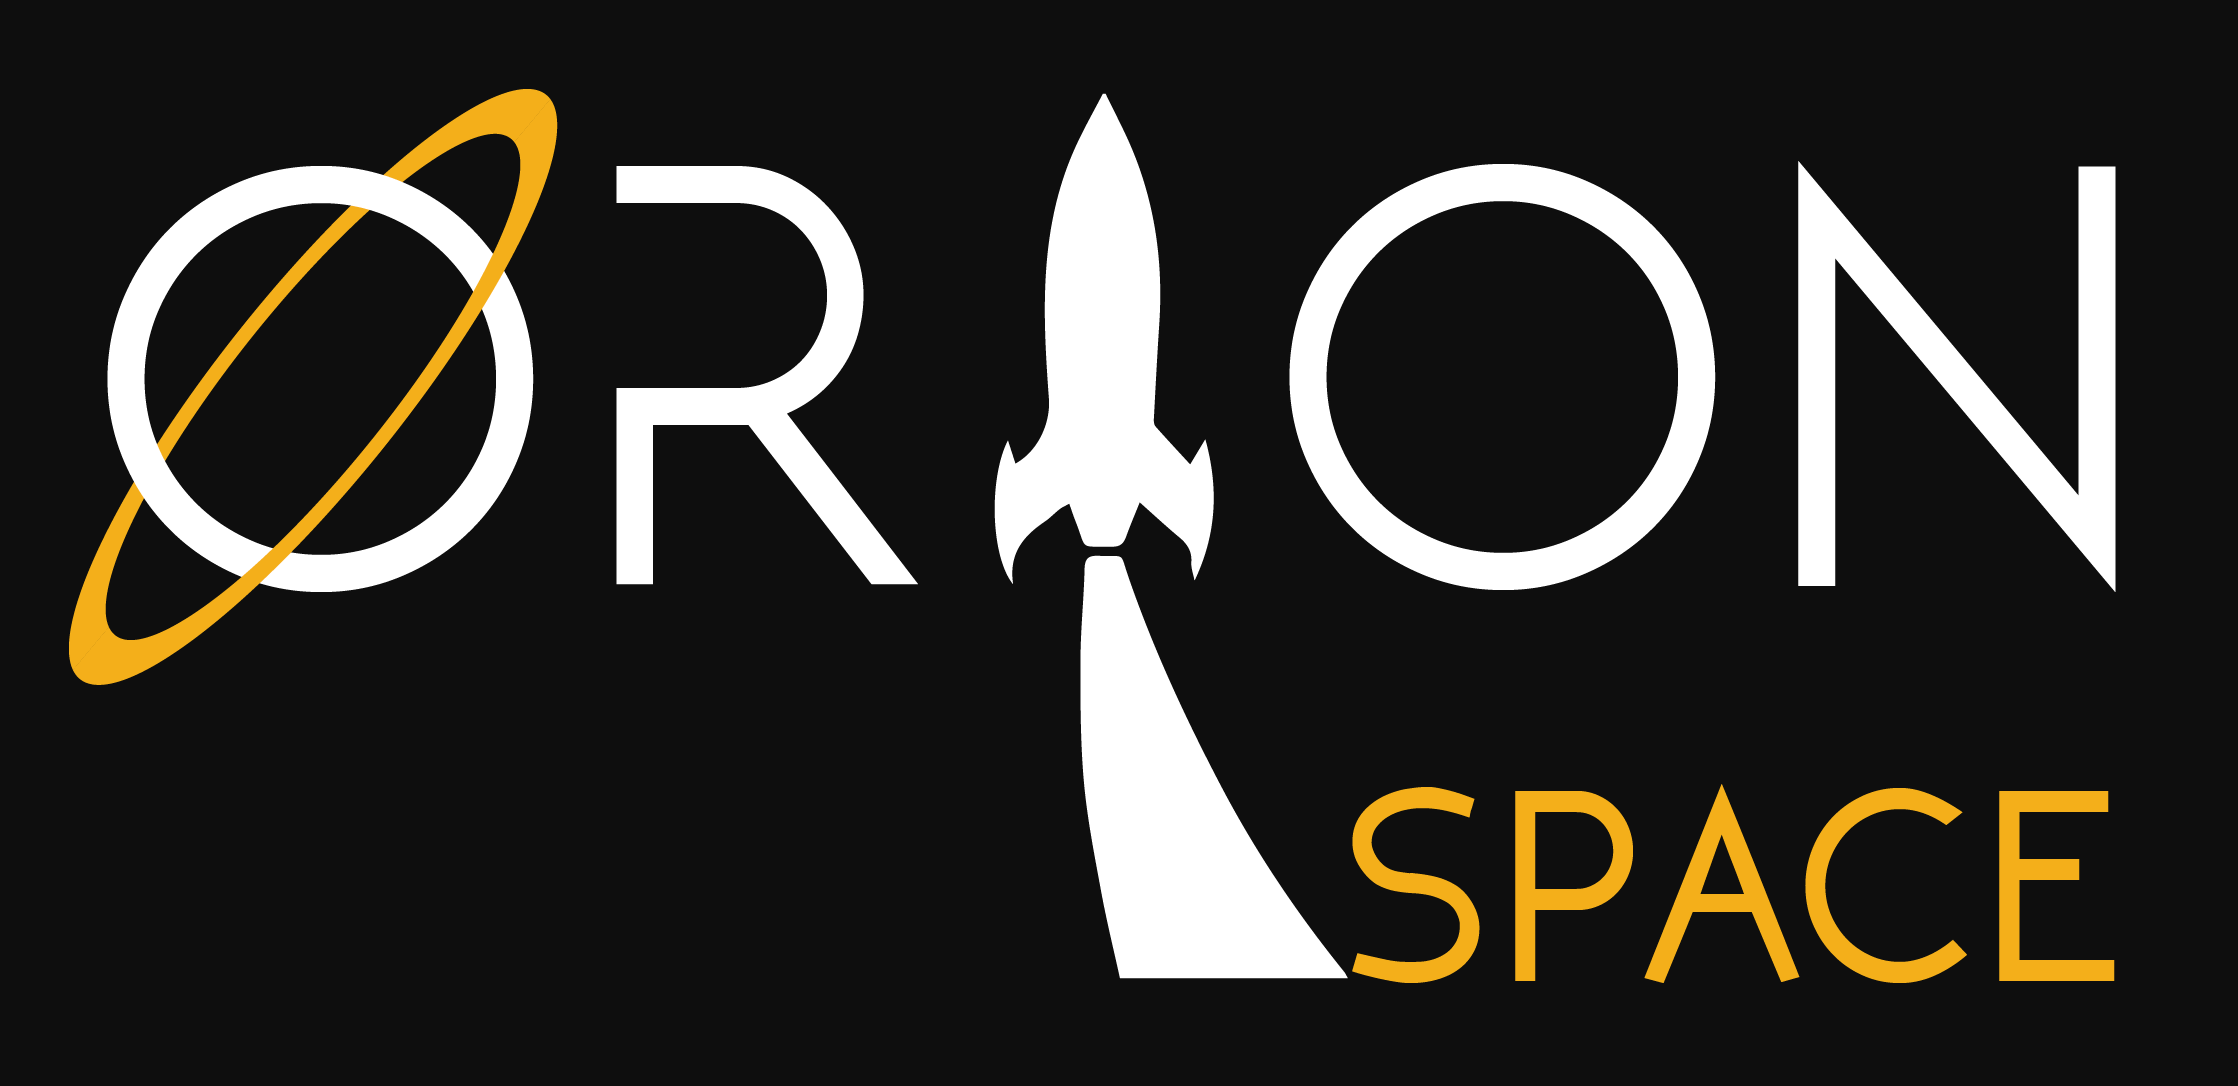 ORION Space logo